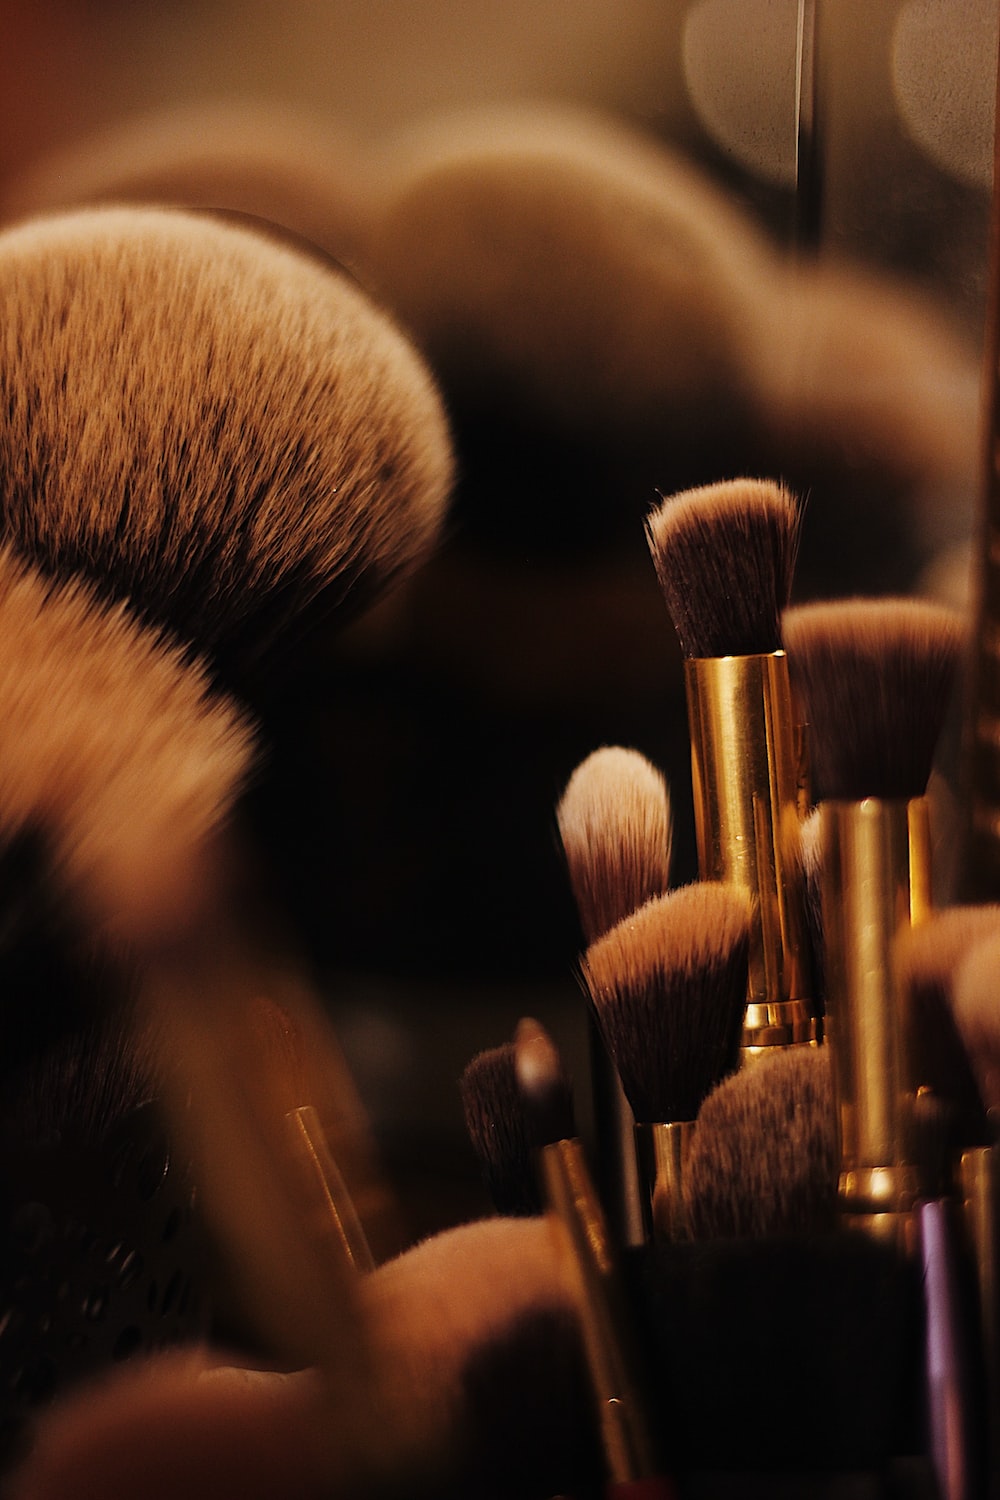 Make Up Brush Picture. Download Free Image